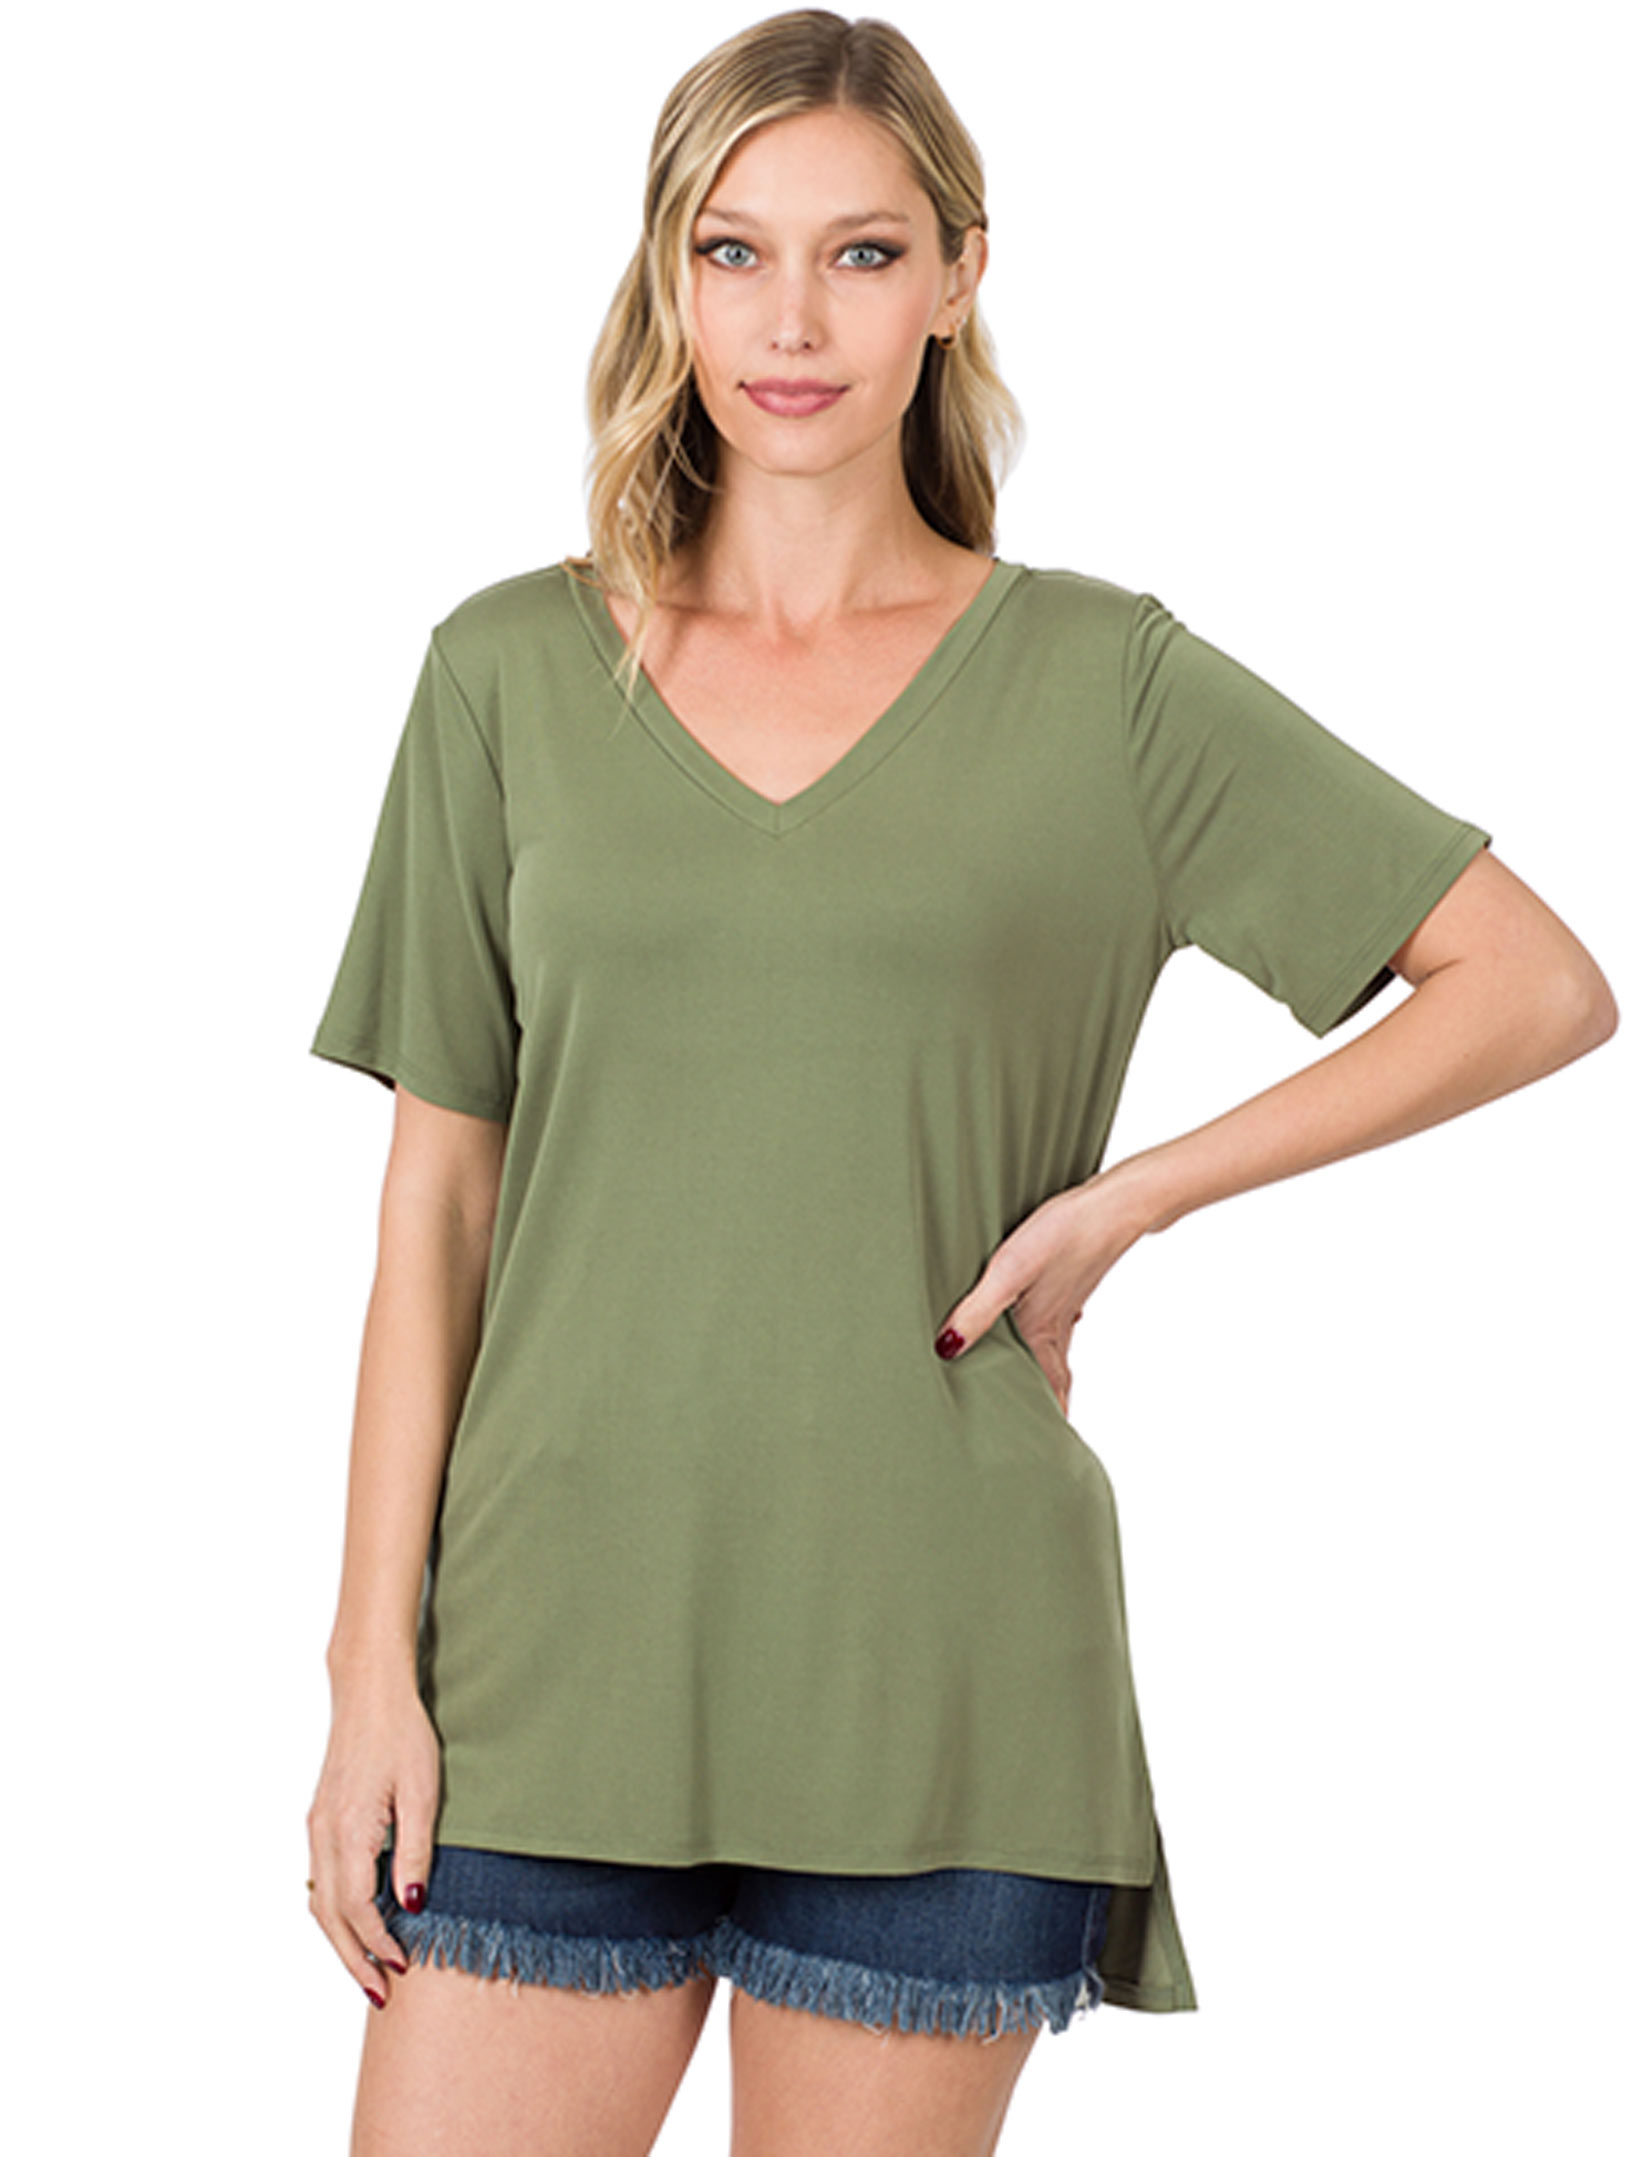 wholesale 8516 - Short Sleeve Modal Tops